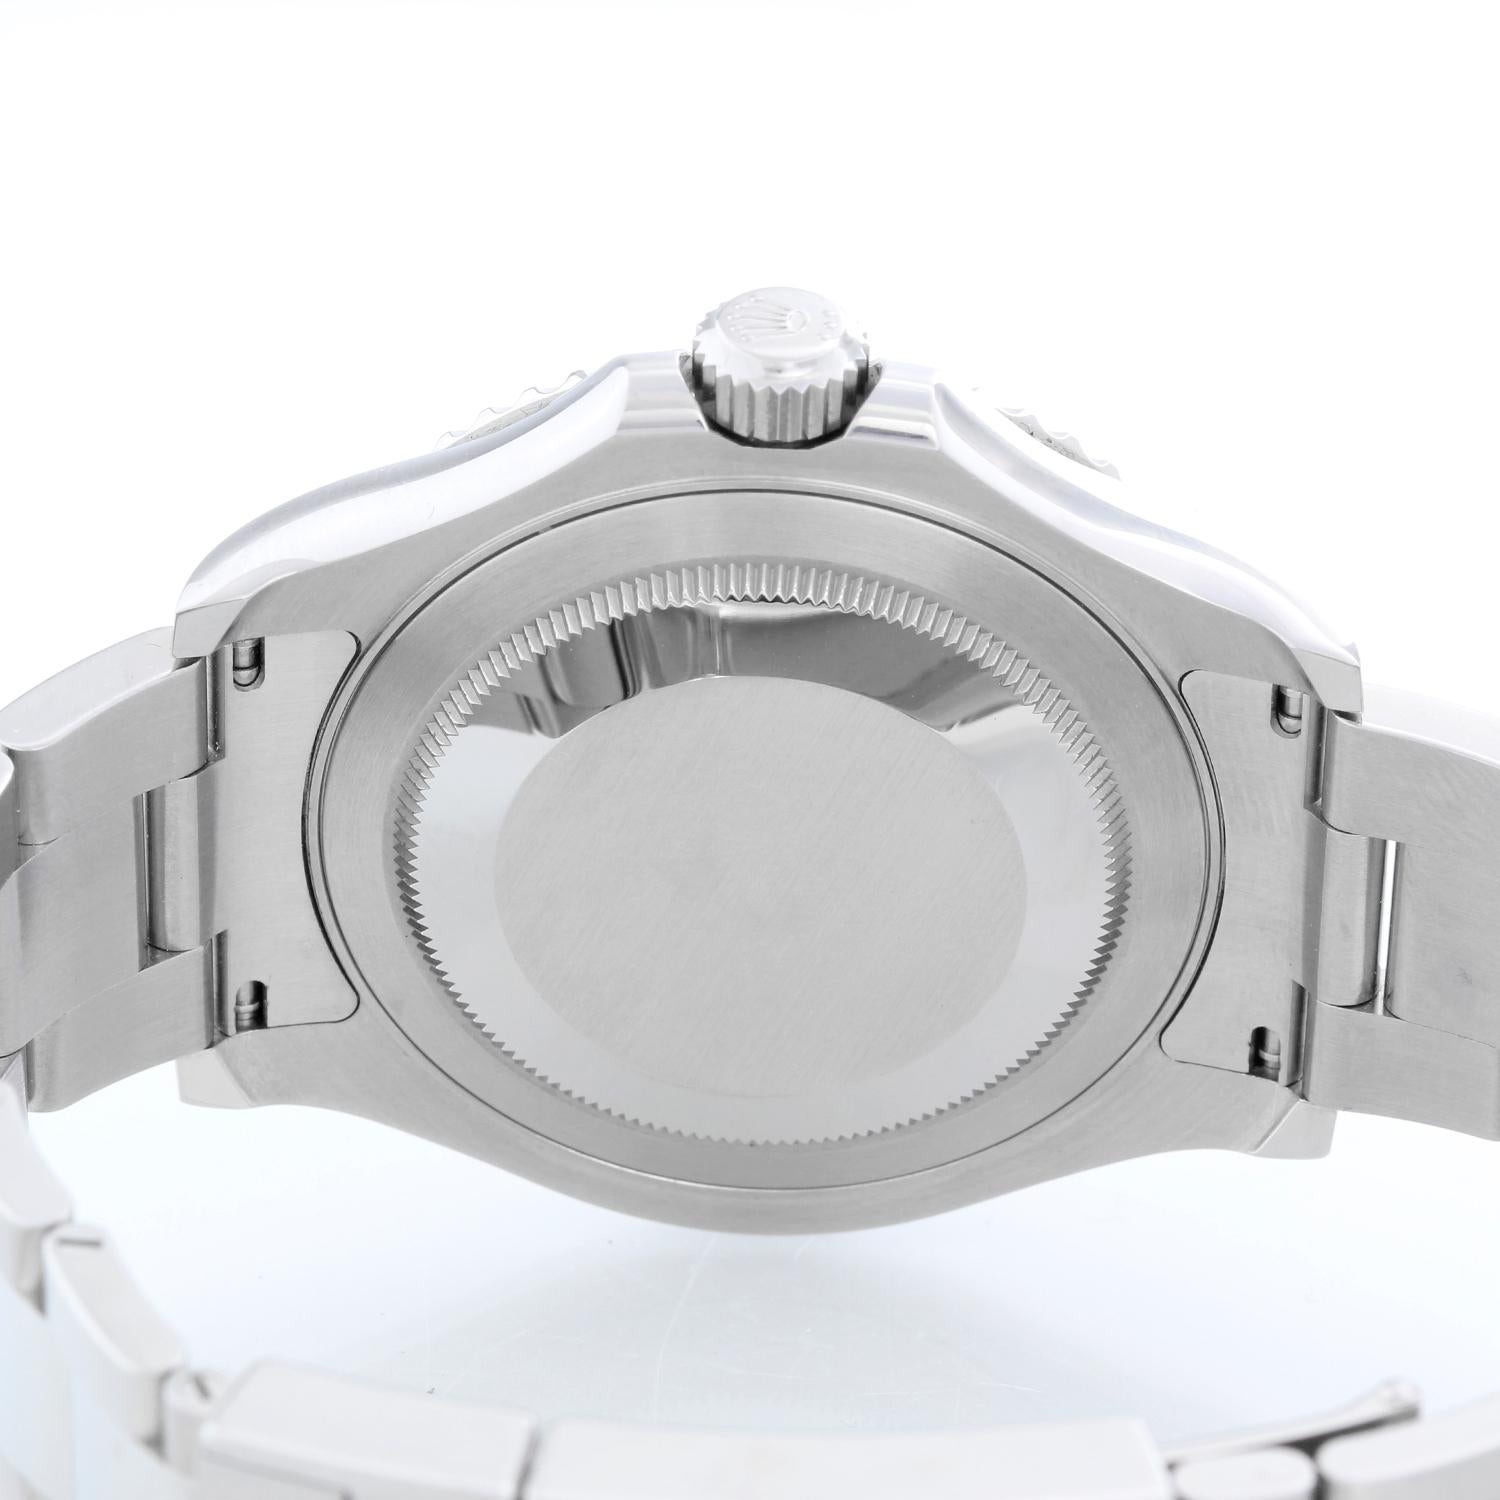 Rolex Stainless Steel Yacht-Master Automatic Wristwatch Ref 116622 2